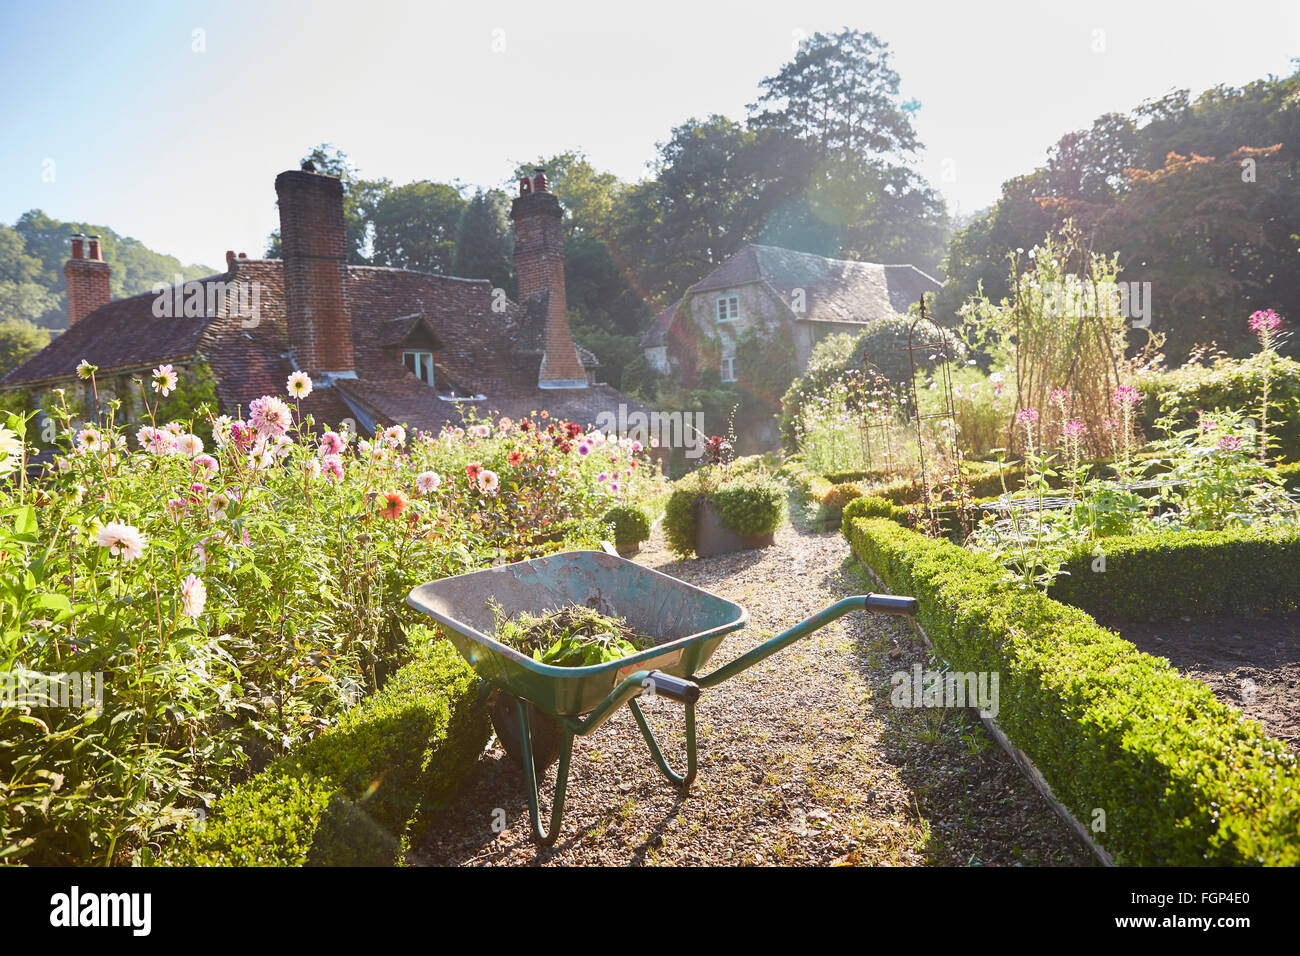 Wheelbarrow in sunny formal garden Stock Photo